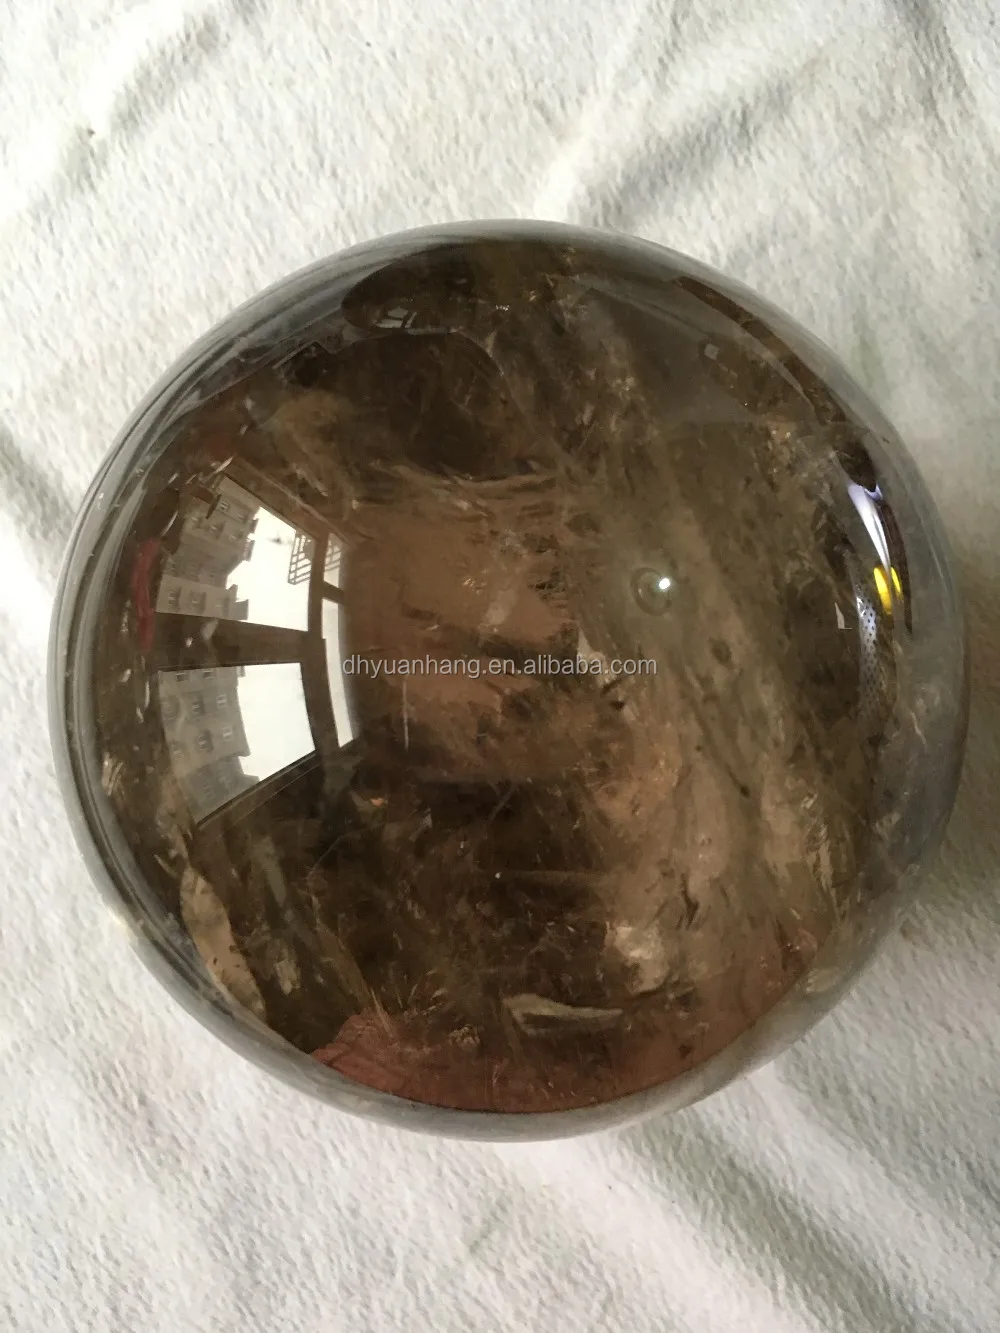 dandandianzi Citrino Natural del Cristal de Cuarzo Esfera Bola Amarilla óptico calcita cristalina espato de Islandia Esfera de la Bola